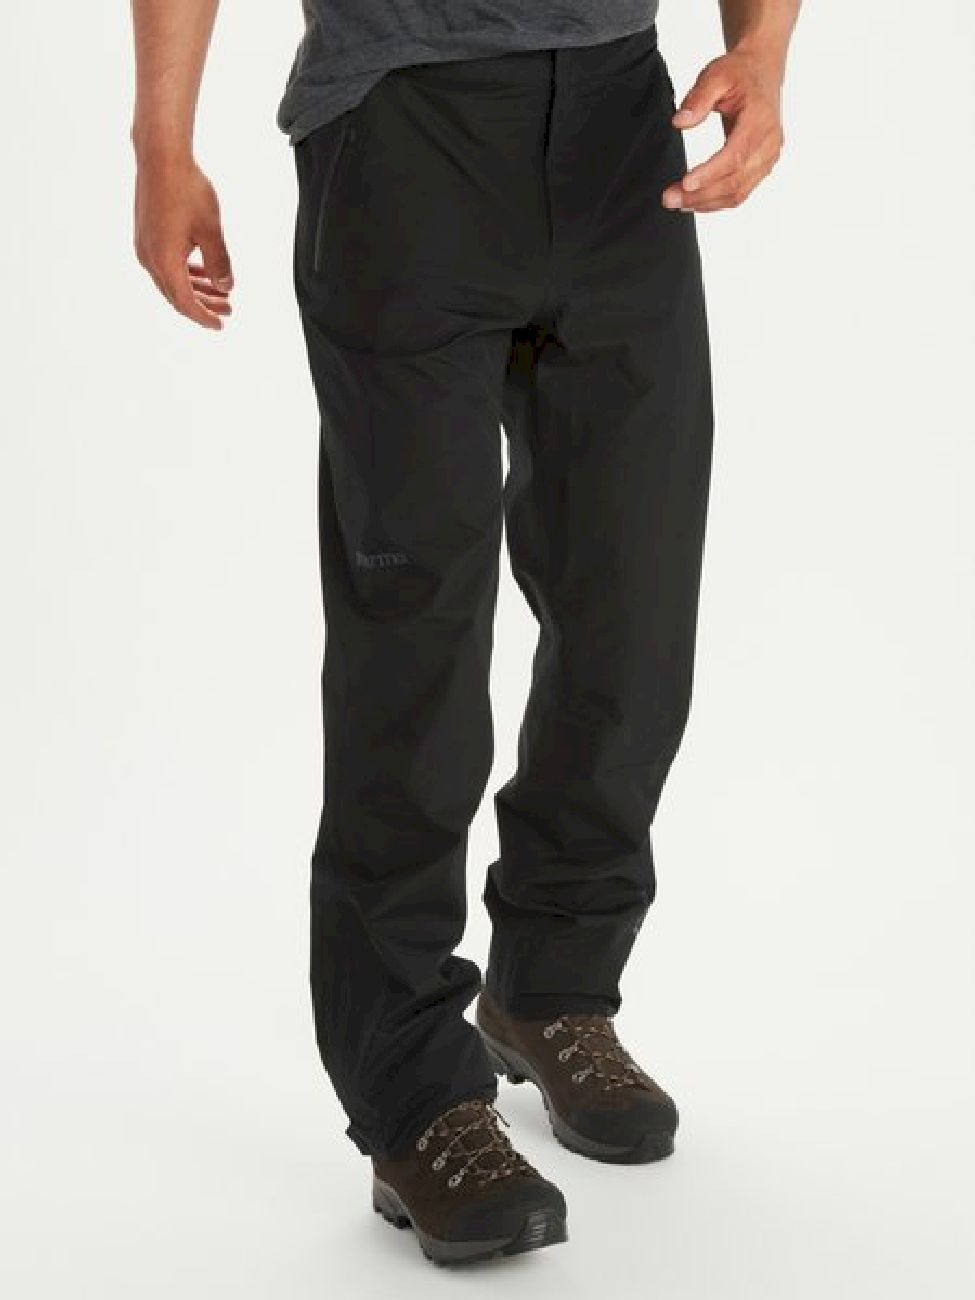 Marmot Minimalist Pant - Waterproof trousers - Men's